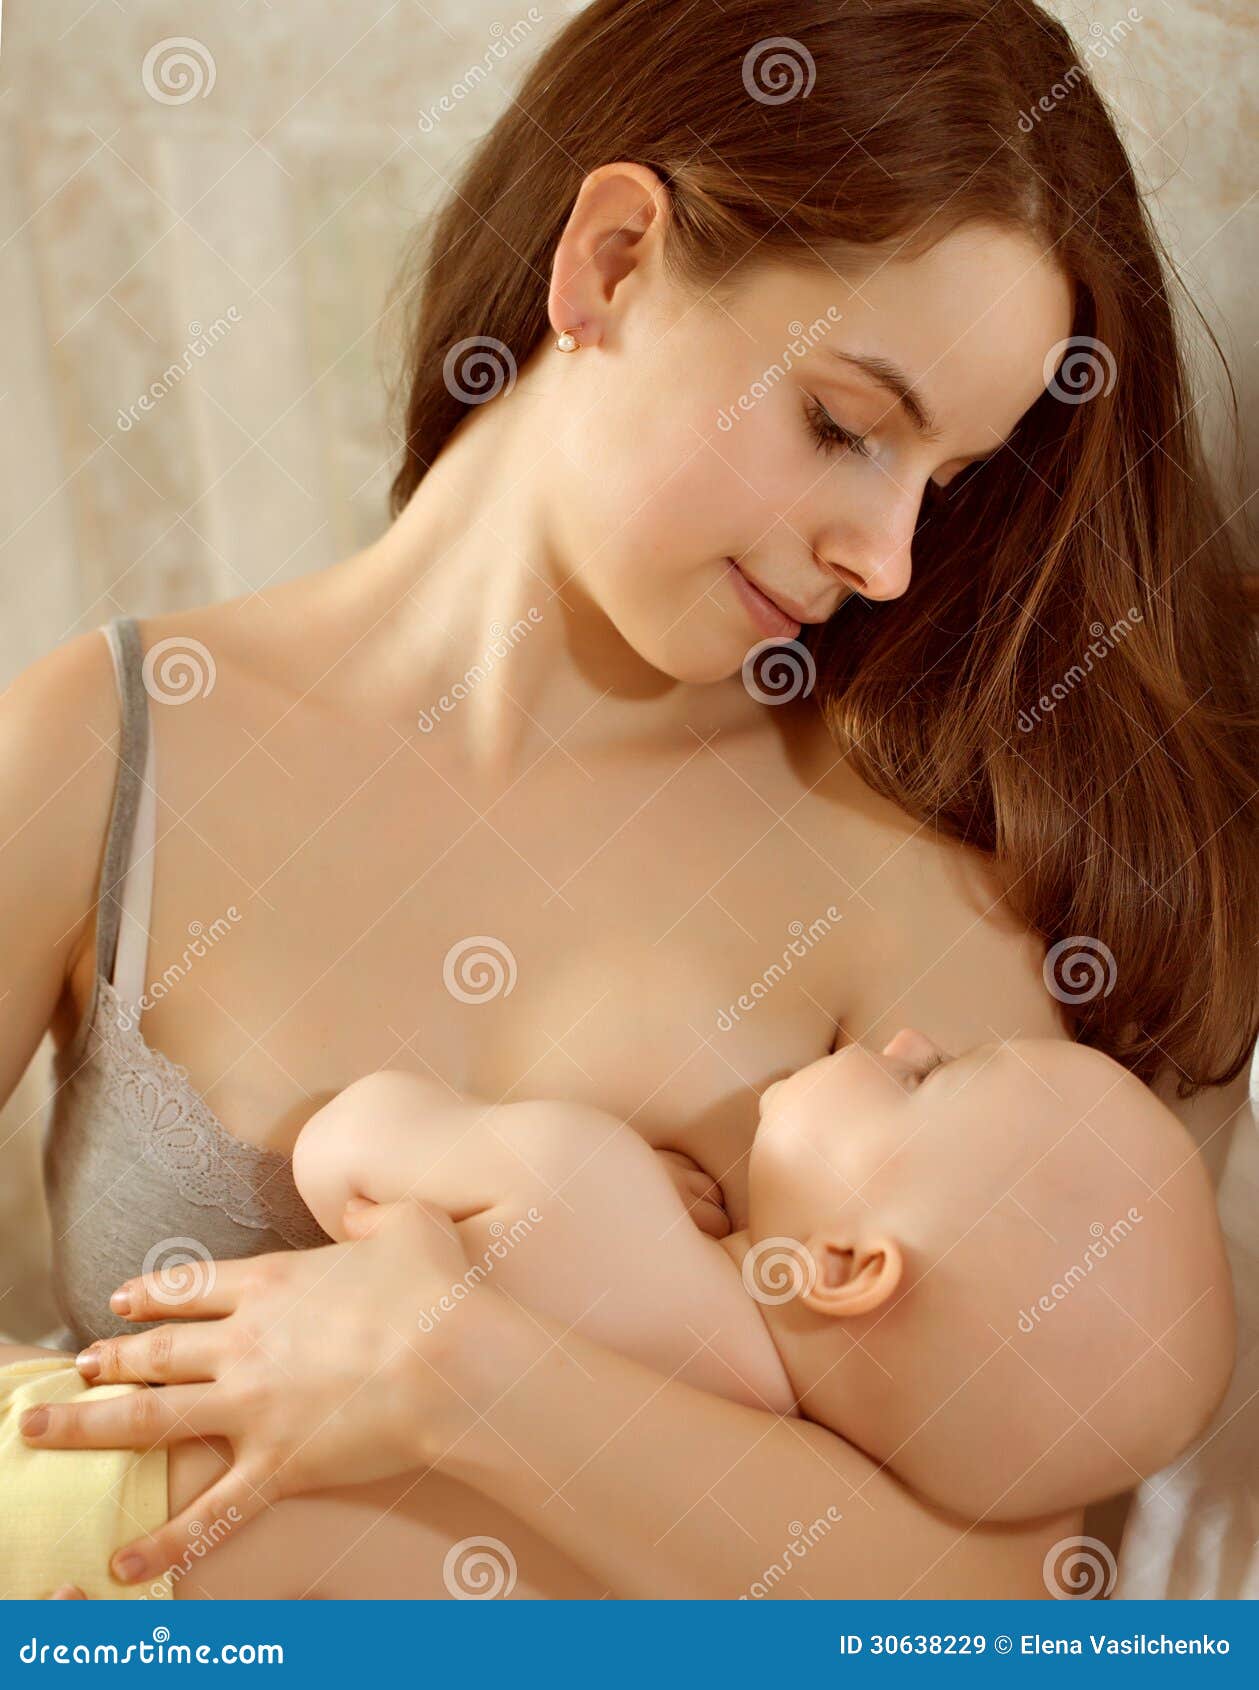 кормящая мама застужена грудь фото 82